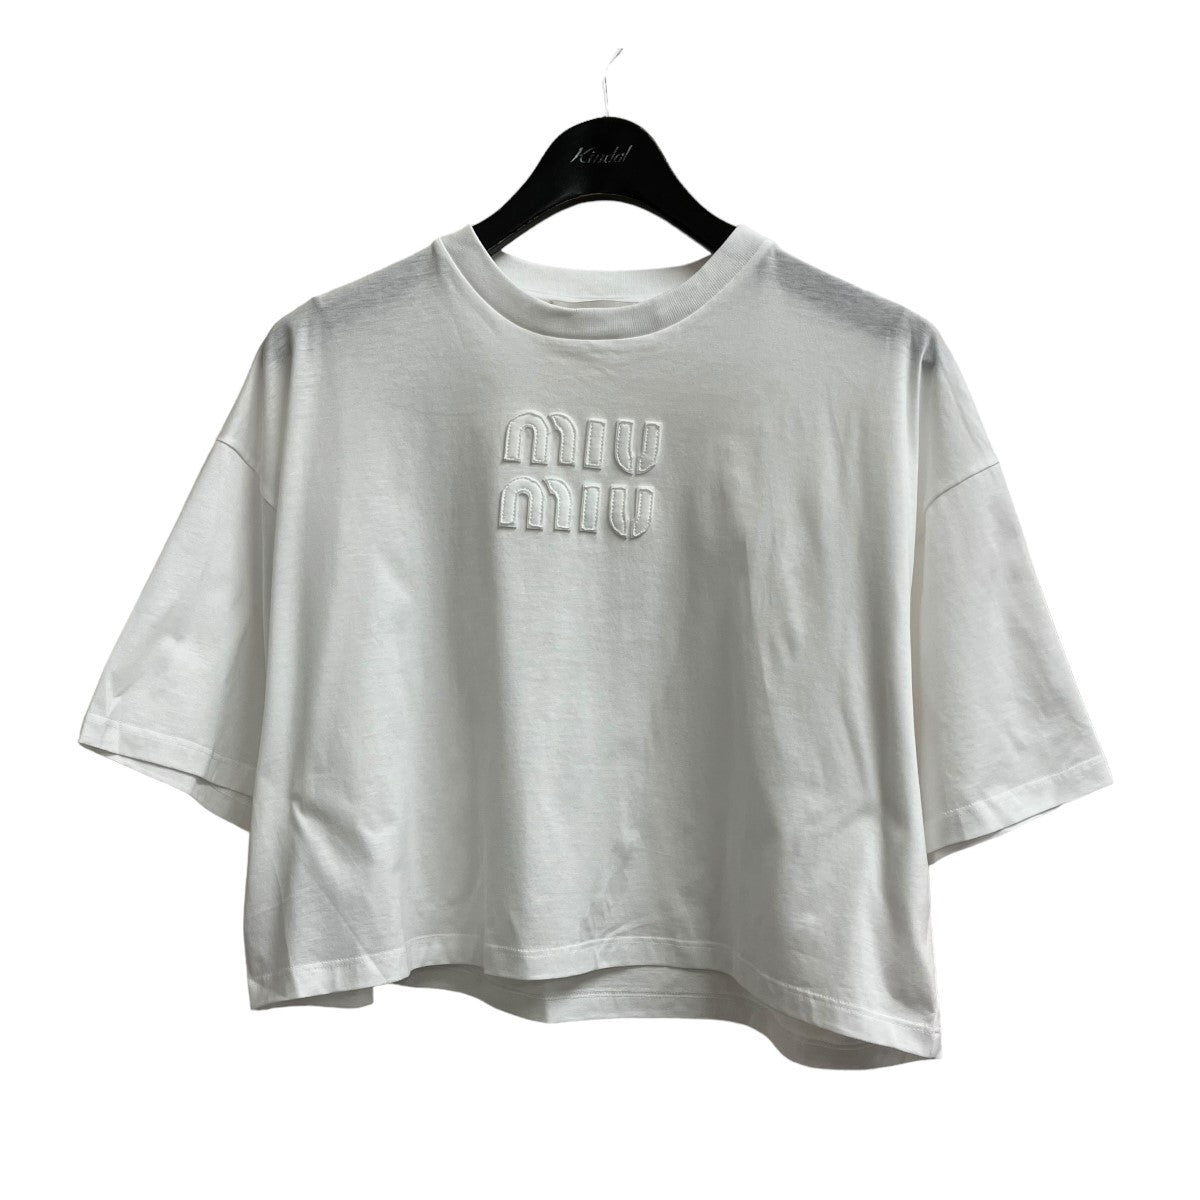 MIU MIU(ミュウミュウ) 23AW 刺繍ロゴ入り コットンジャージー Tシャツ ...